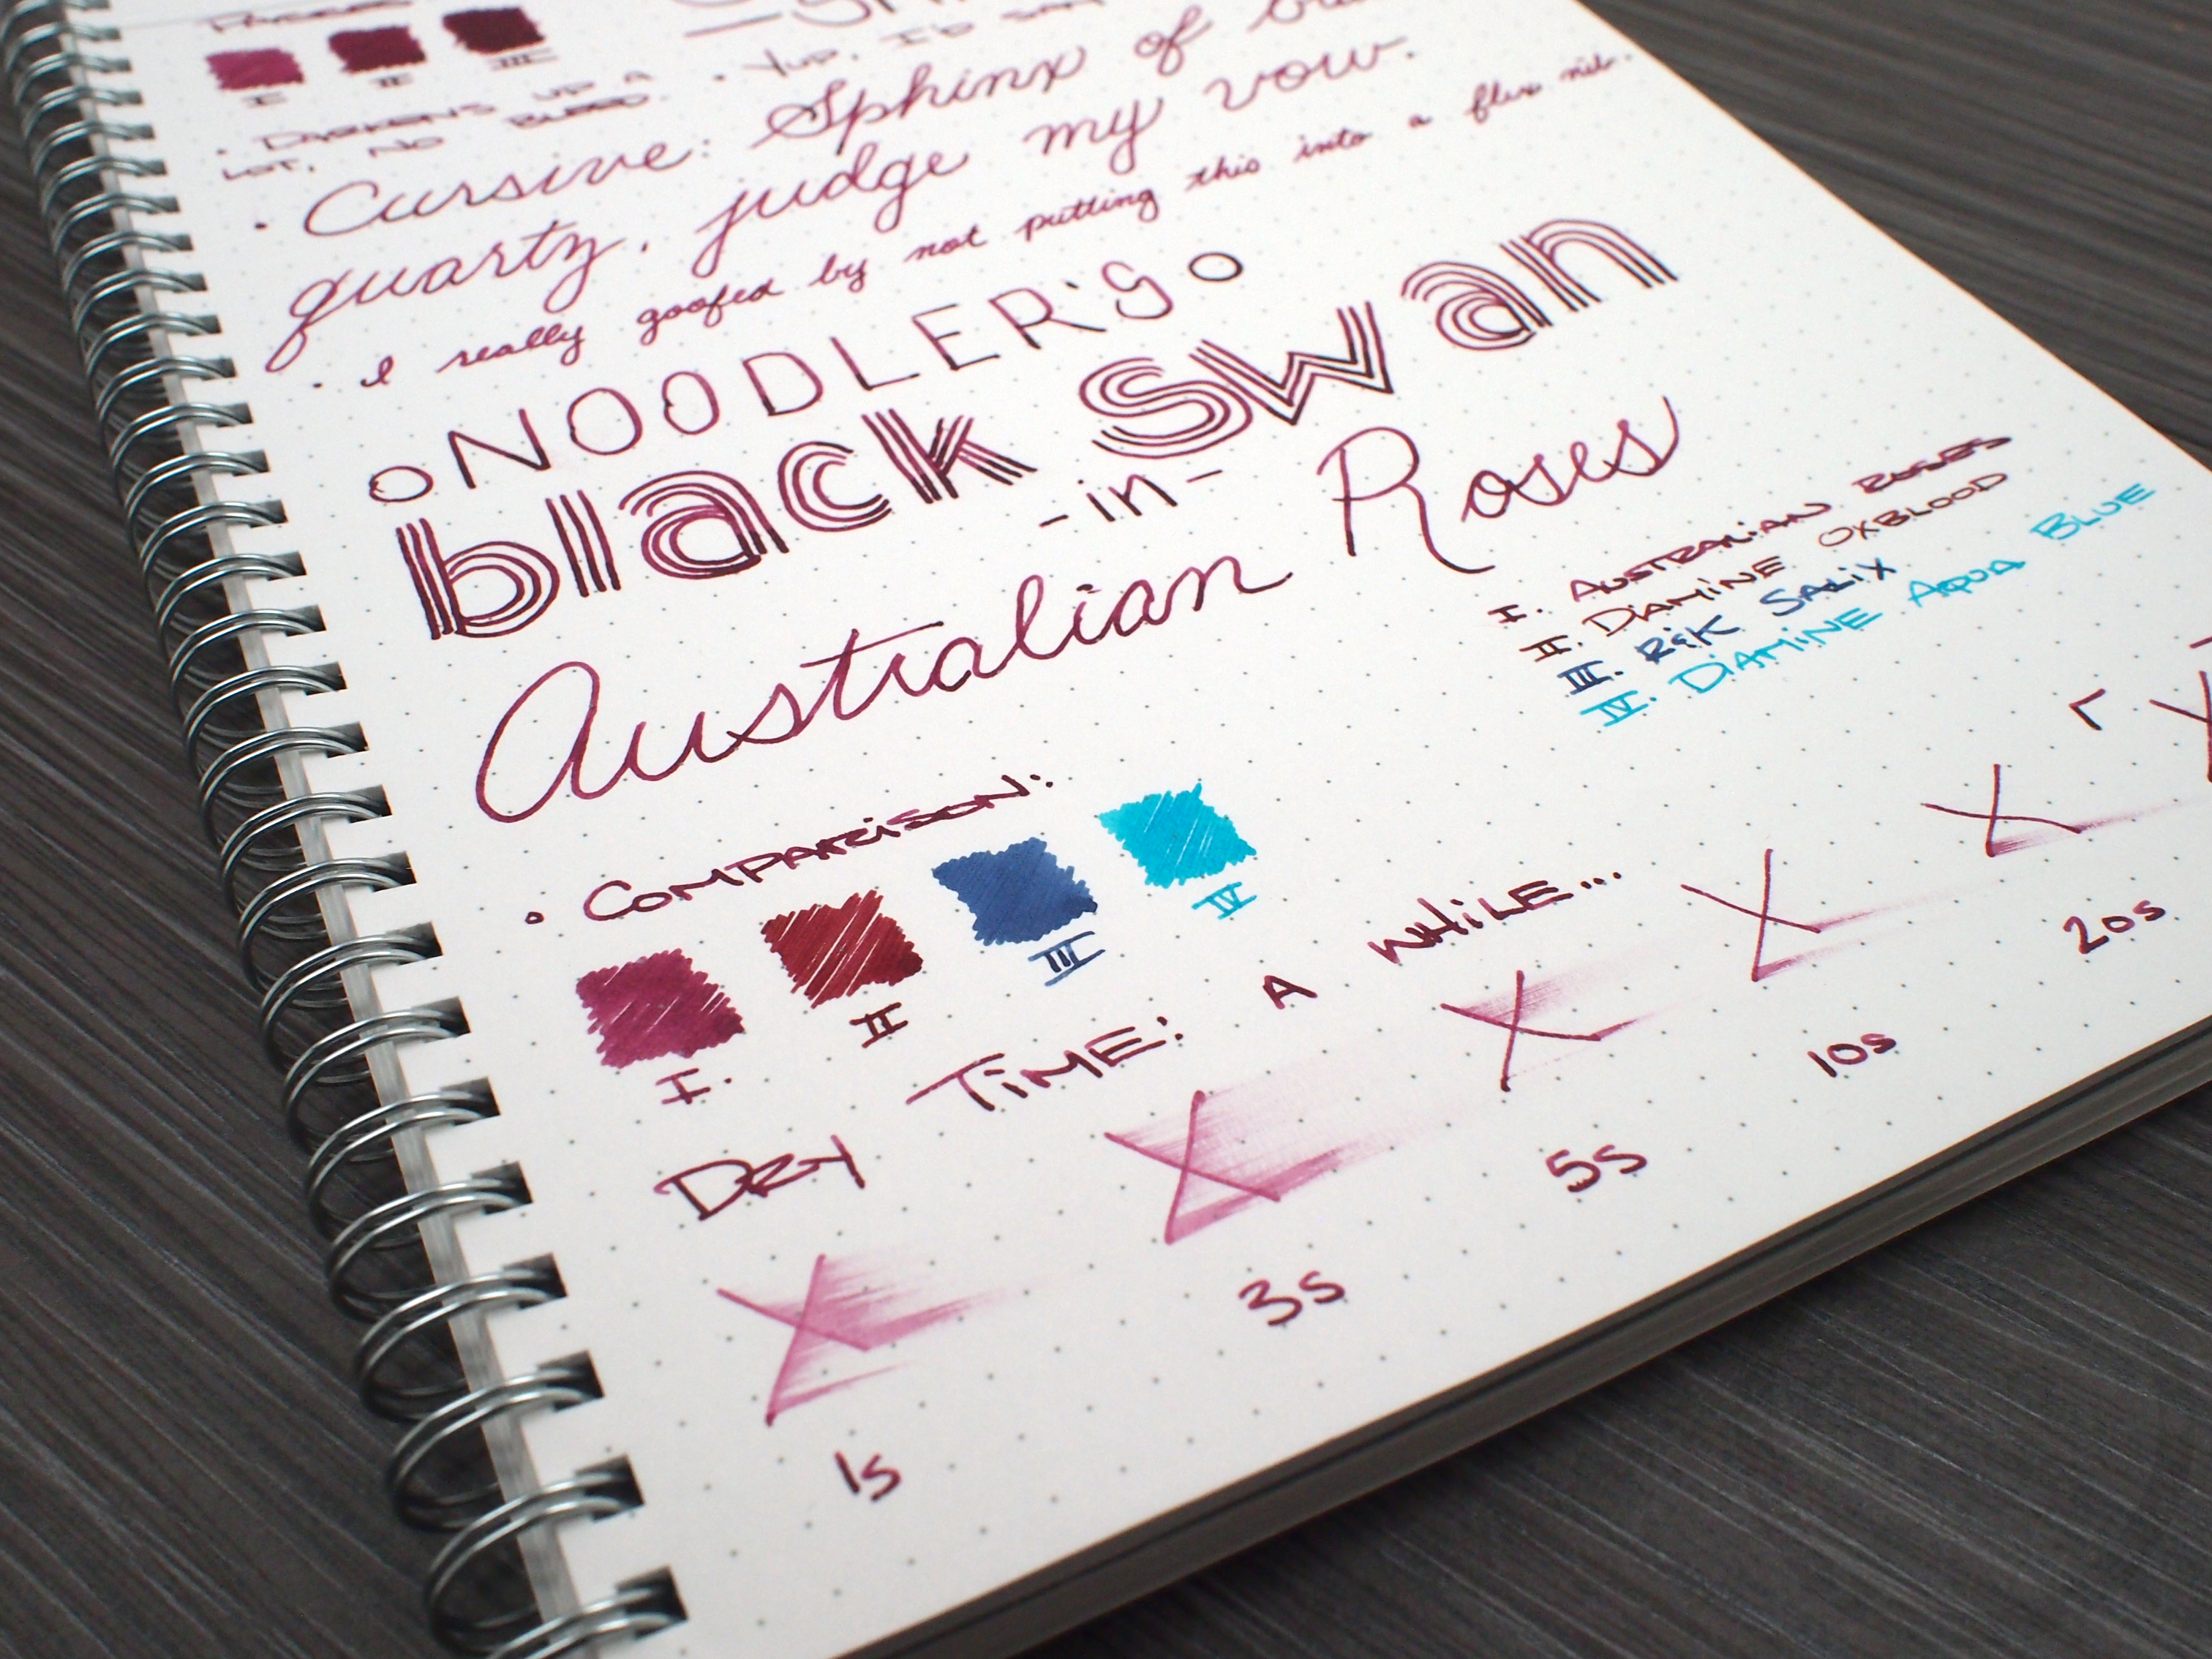 Noodler’s Black Swan in Australian Roses – Ink Review